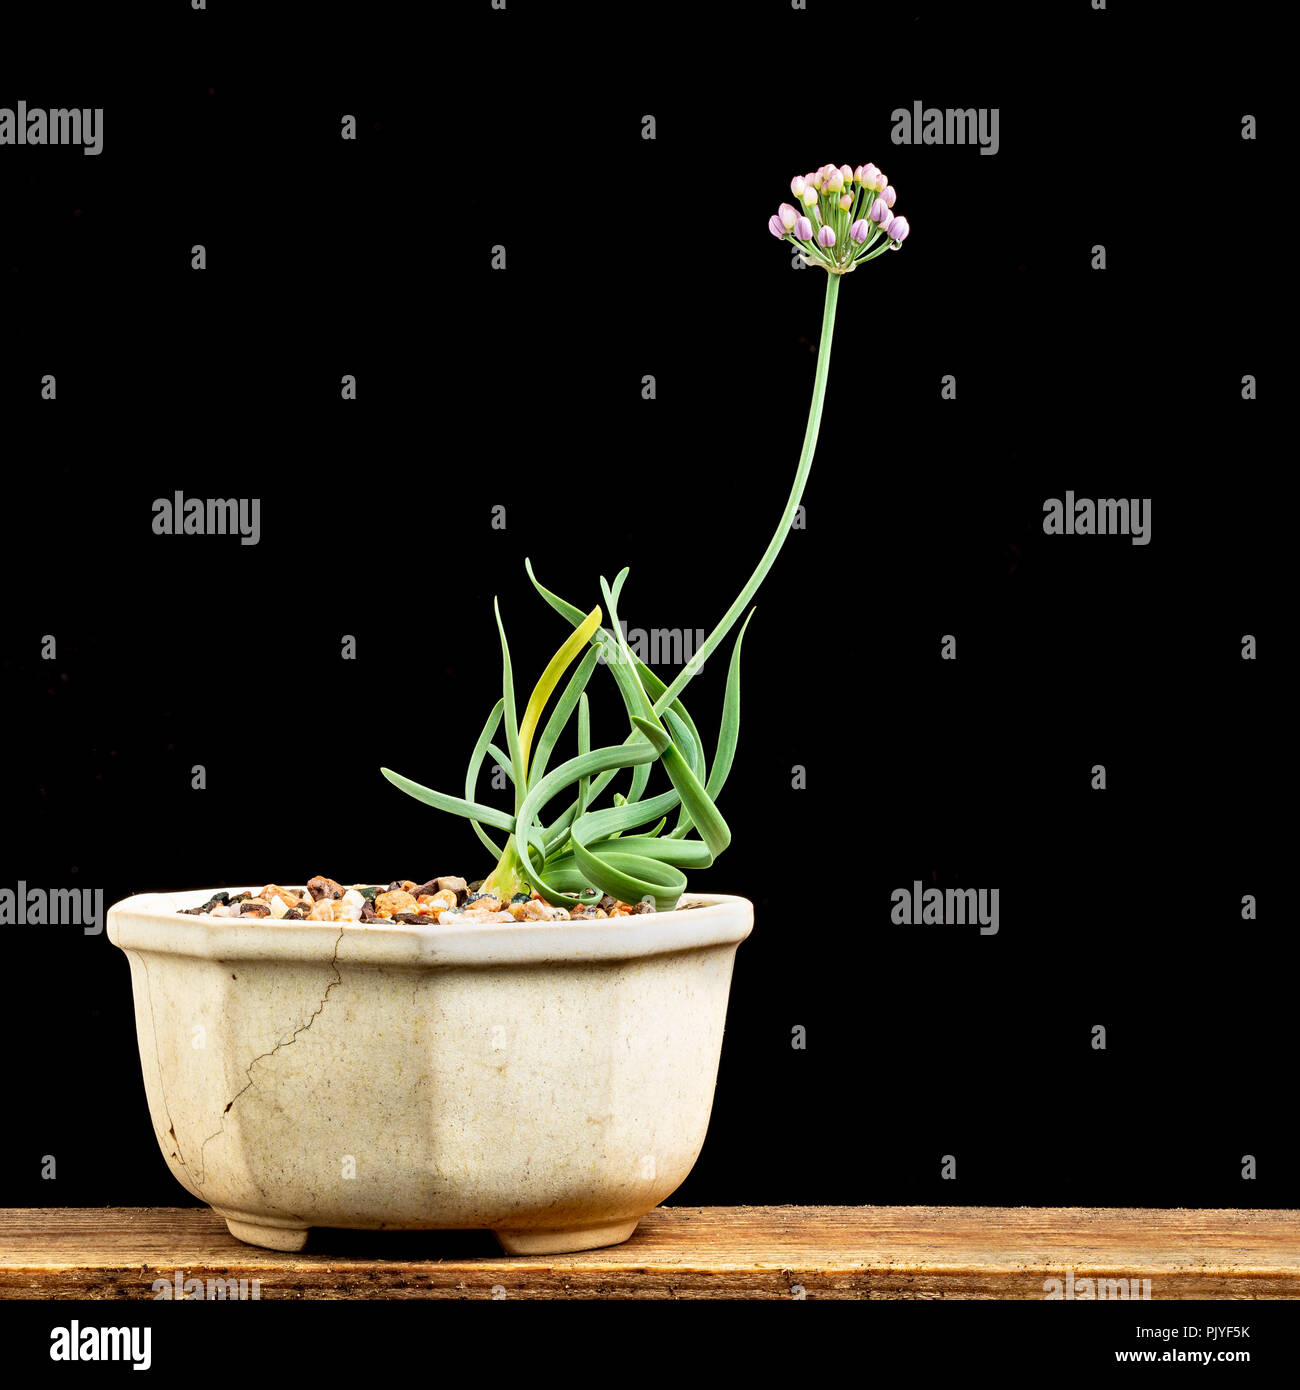 Allium senescens v. glauca, planted in an old bonsai dish. Stock Photo